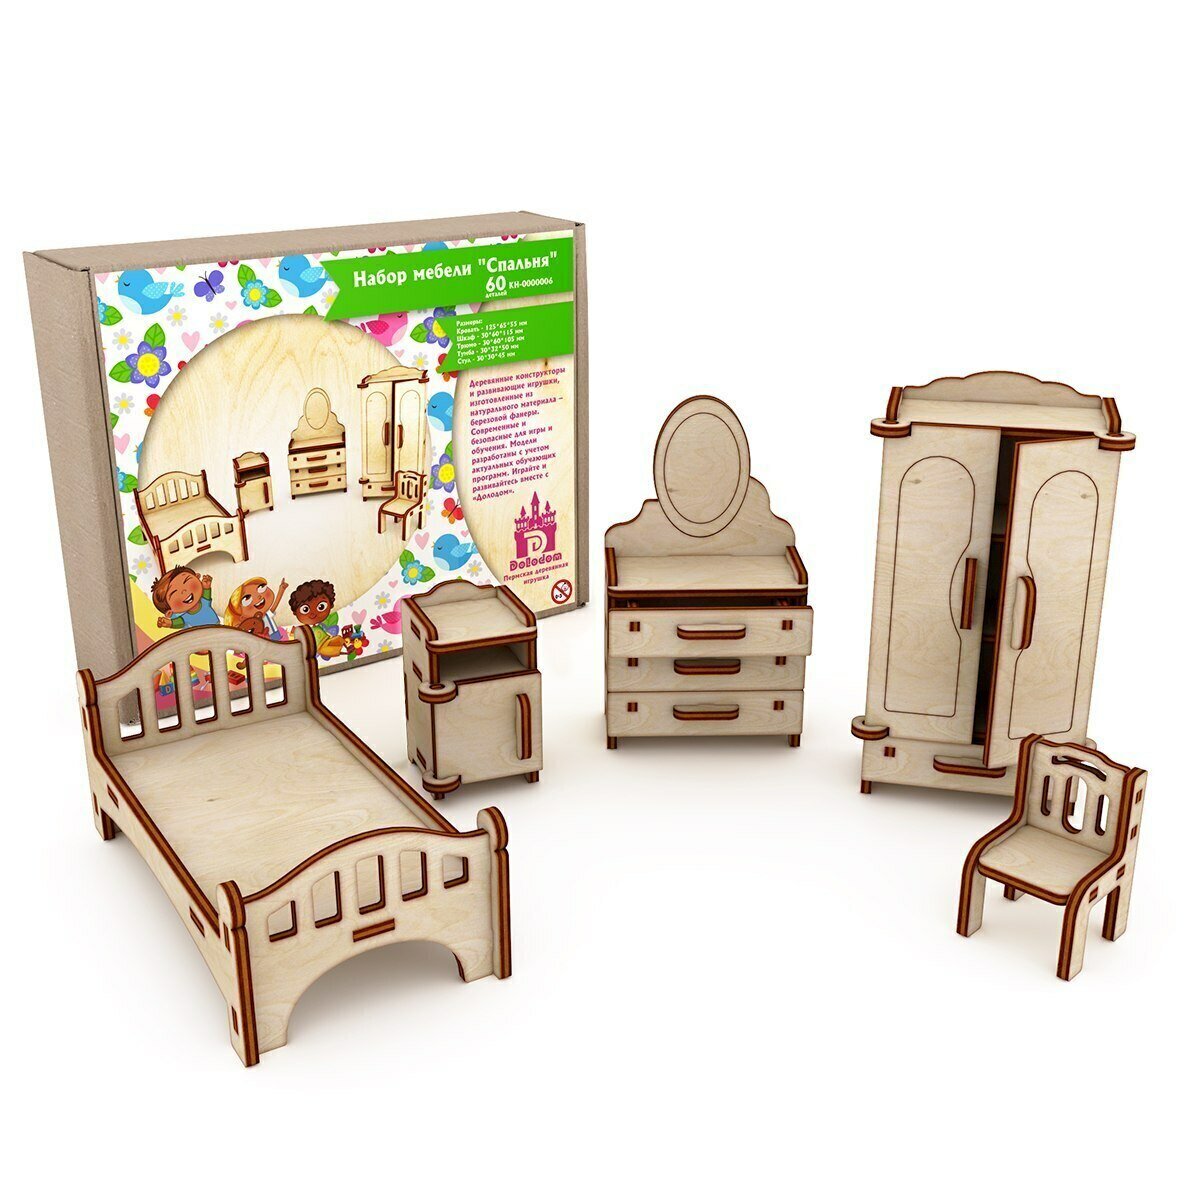 Набор мебели Dolodom "Спальня",60 деталей (Коробка, упаковка)